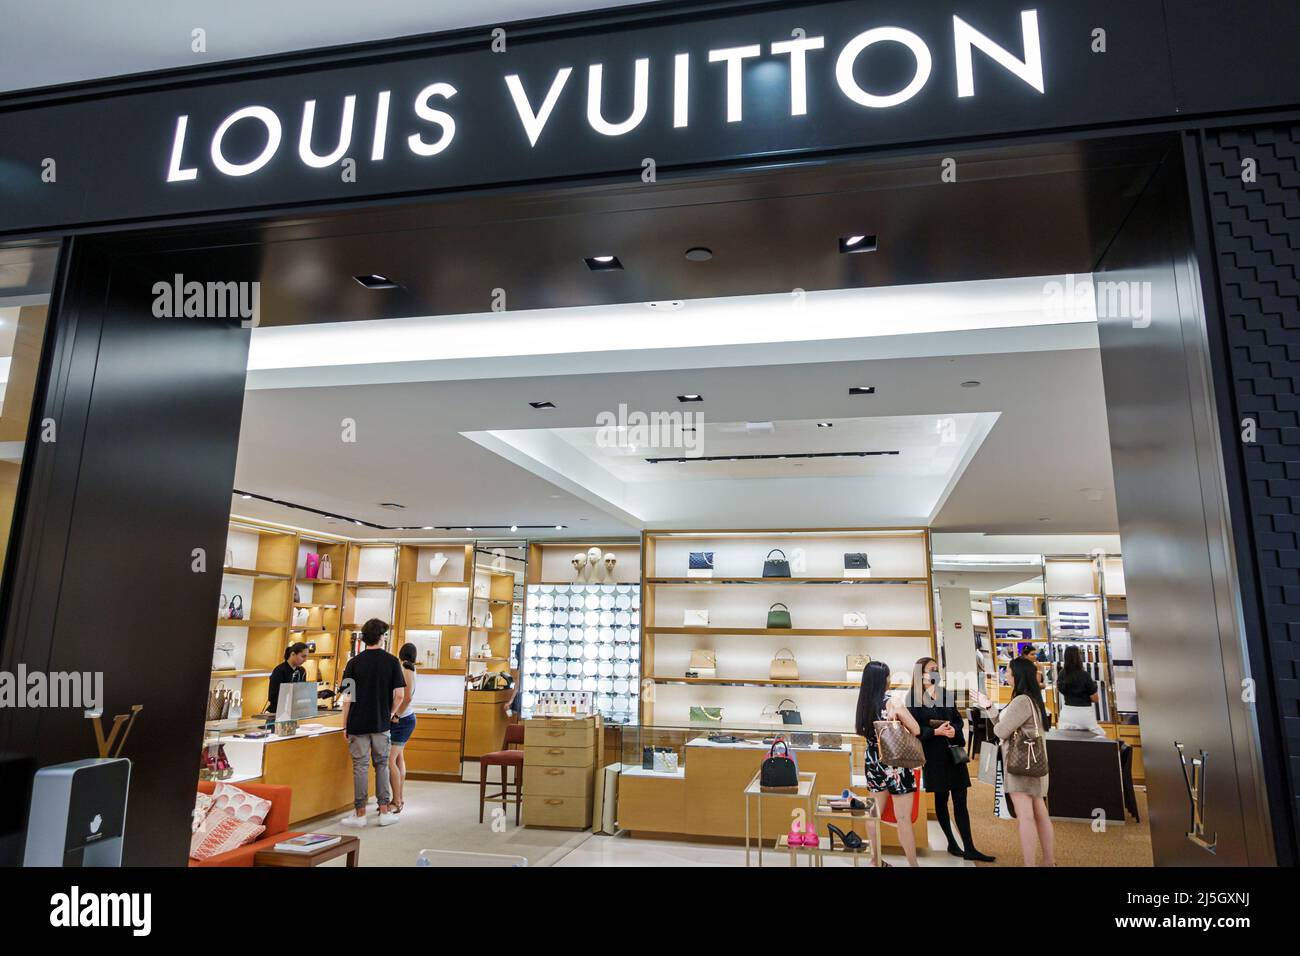 Neiman Marcus Louis Vuitton Store